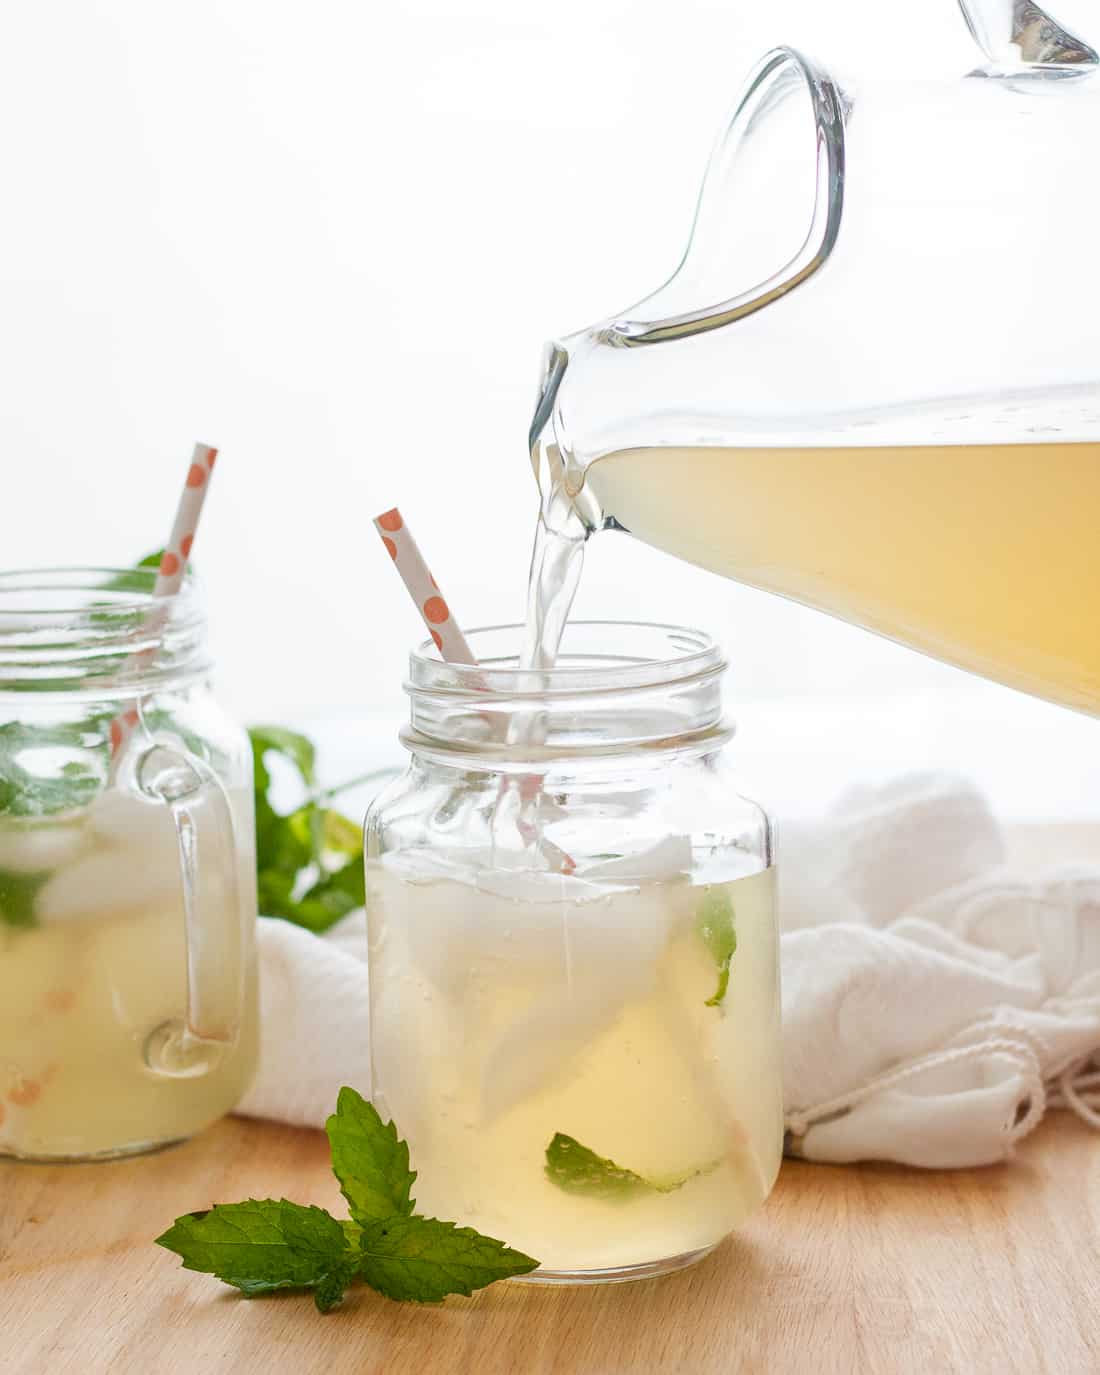 Marvelous Mint Lemonade Recipe * GoodieGodmother.com